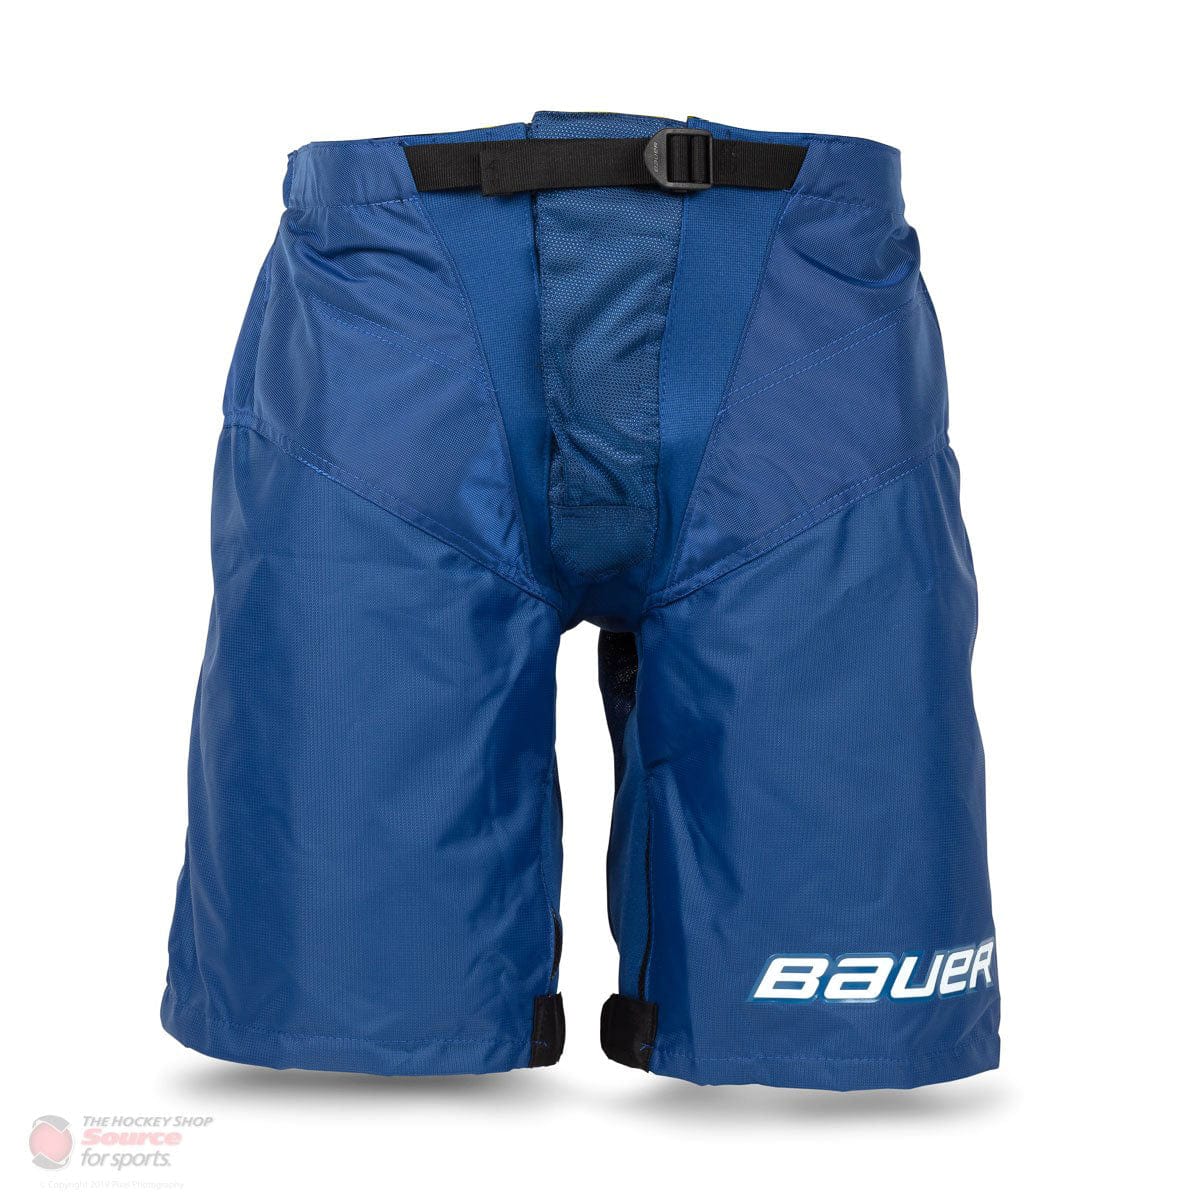 Bauer Supreme Senior Hockey Pant Shells (2019)